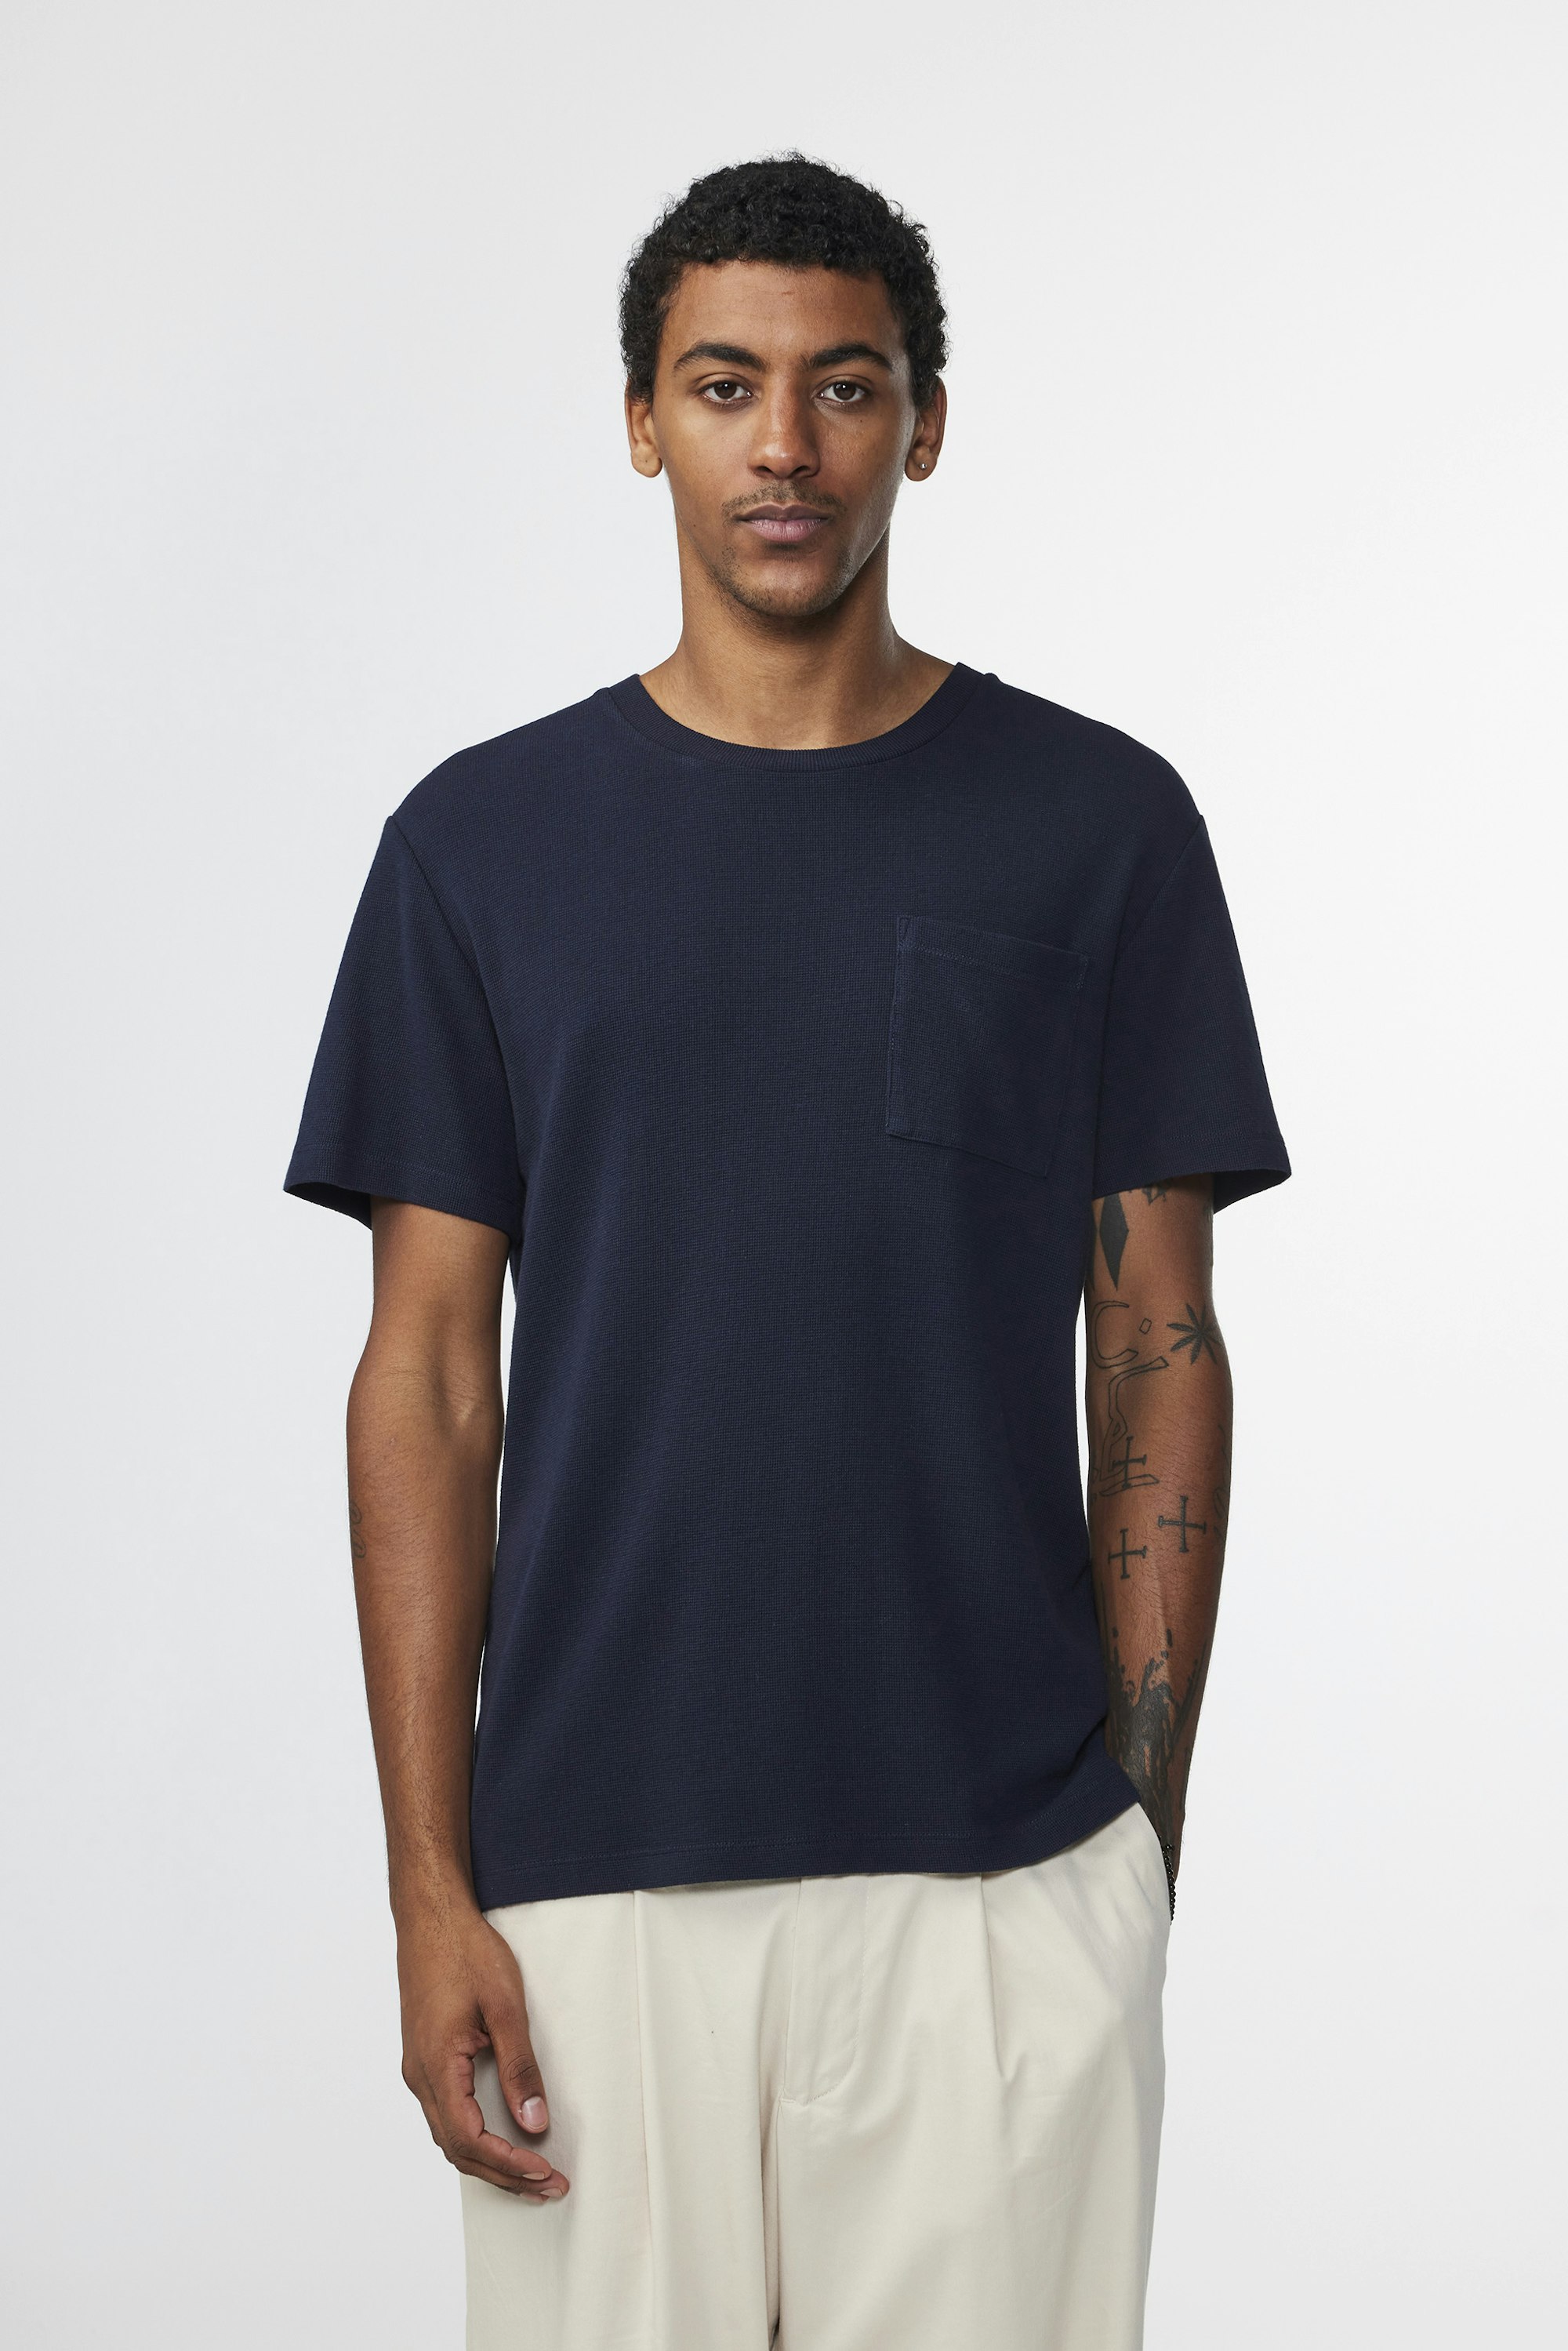 Clive 3323 men\'s t-shirt - at Buy - Blue online